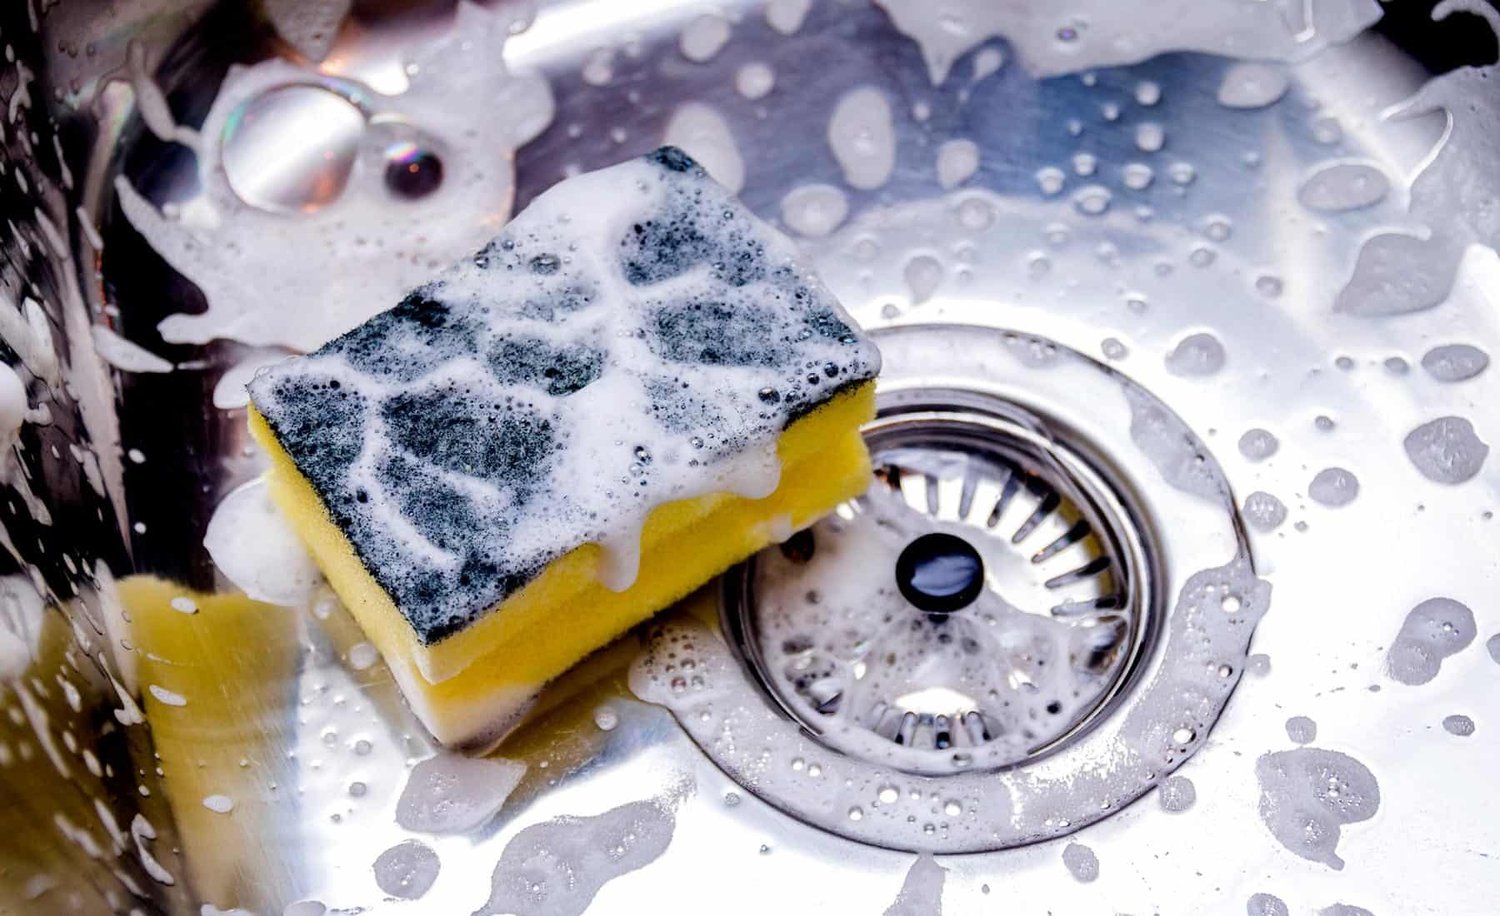 How Often Should You Replace Your Dish-Washing Sponge?